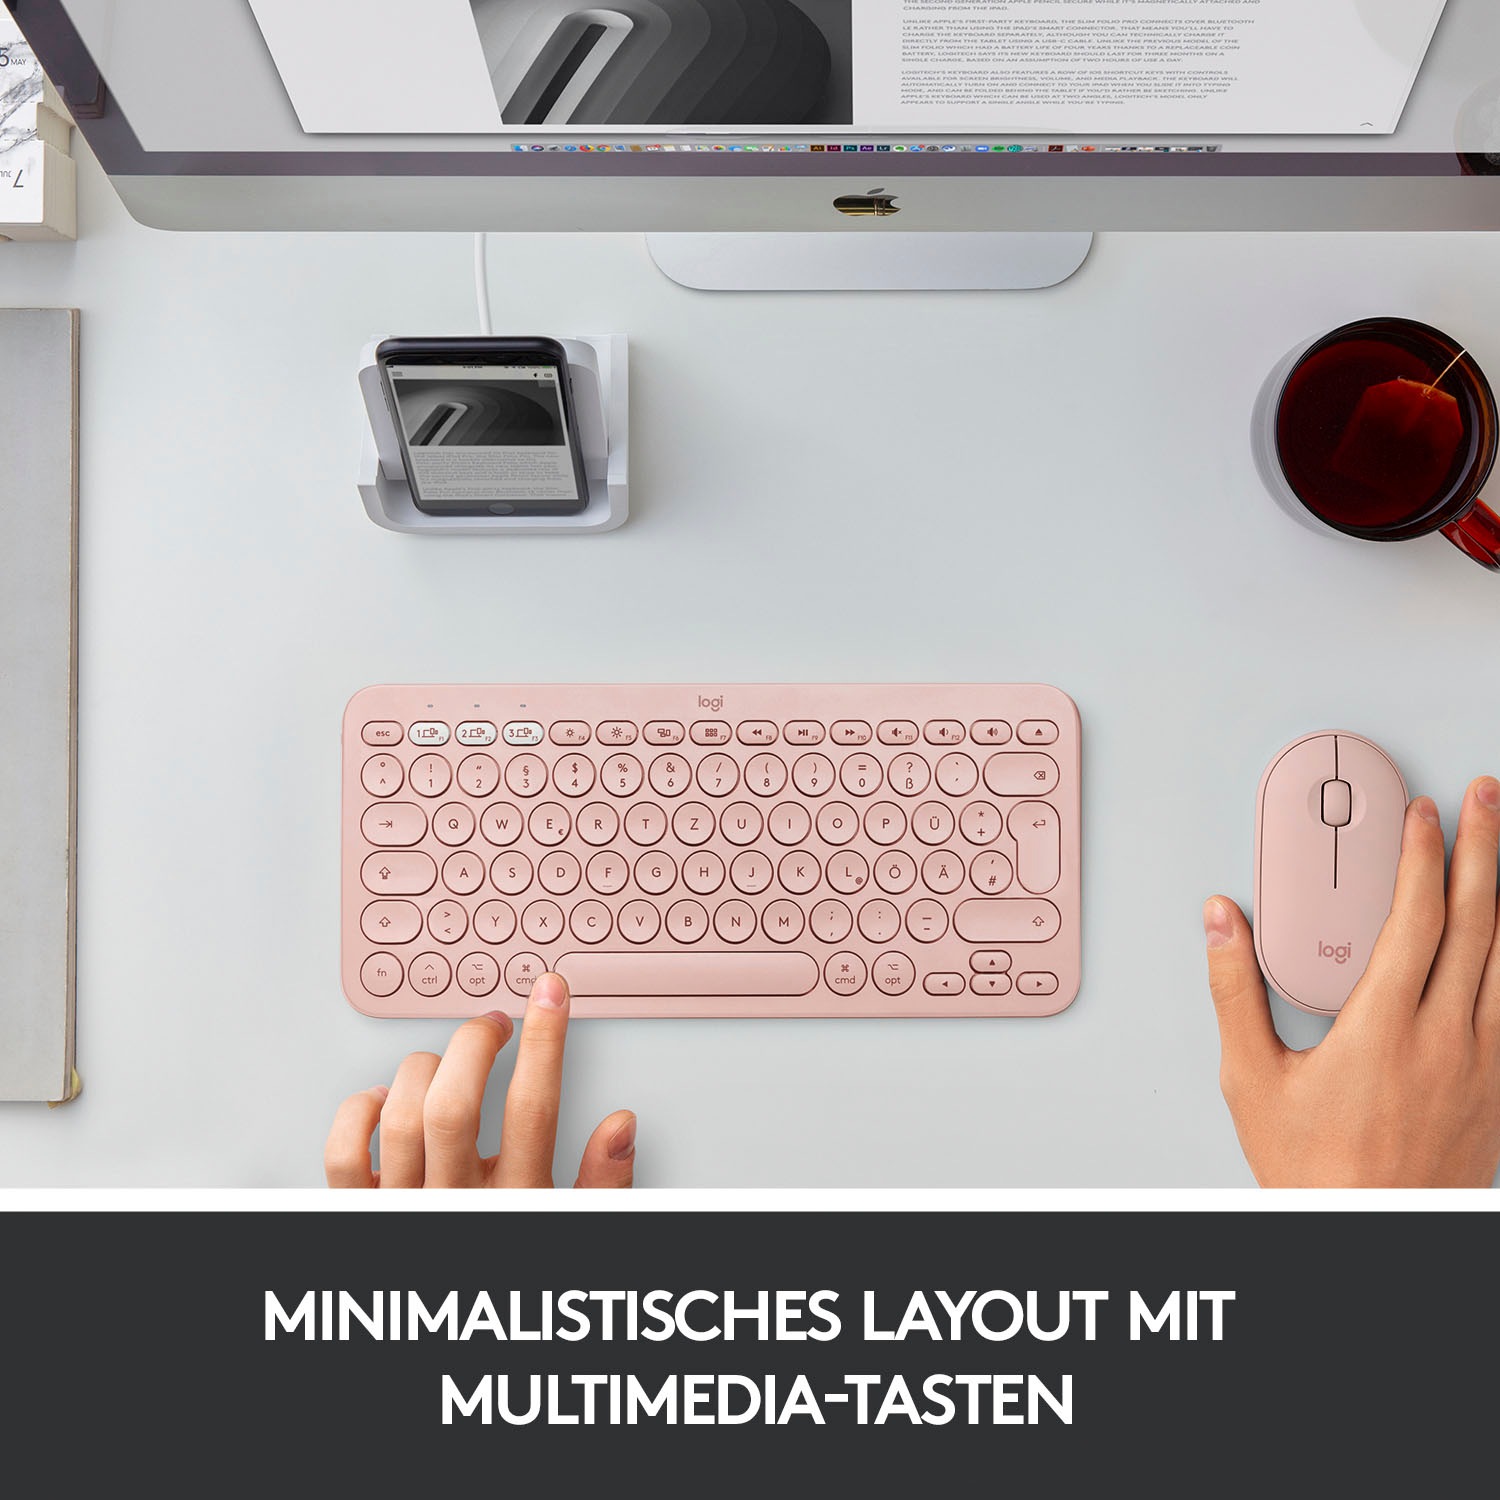 Logitech Apple-Tastatur »K380 Rose«, (Easy-Switch-iOS Sondertasten)